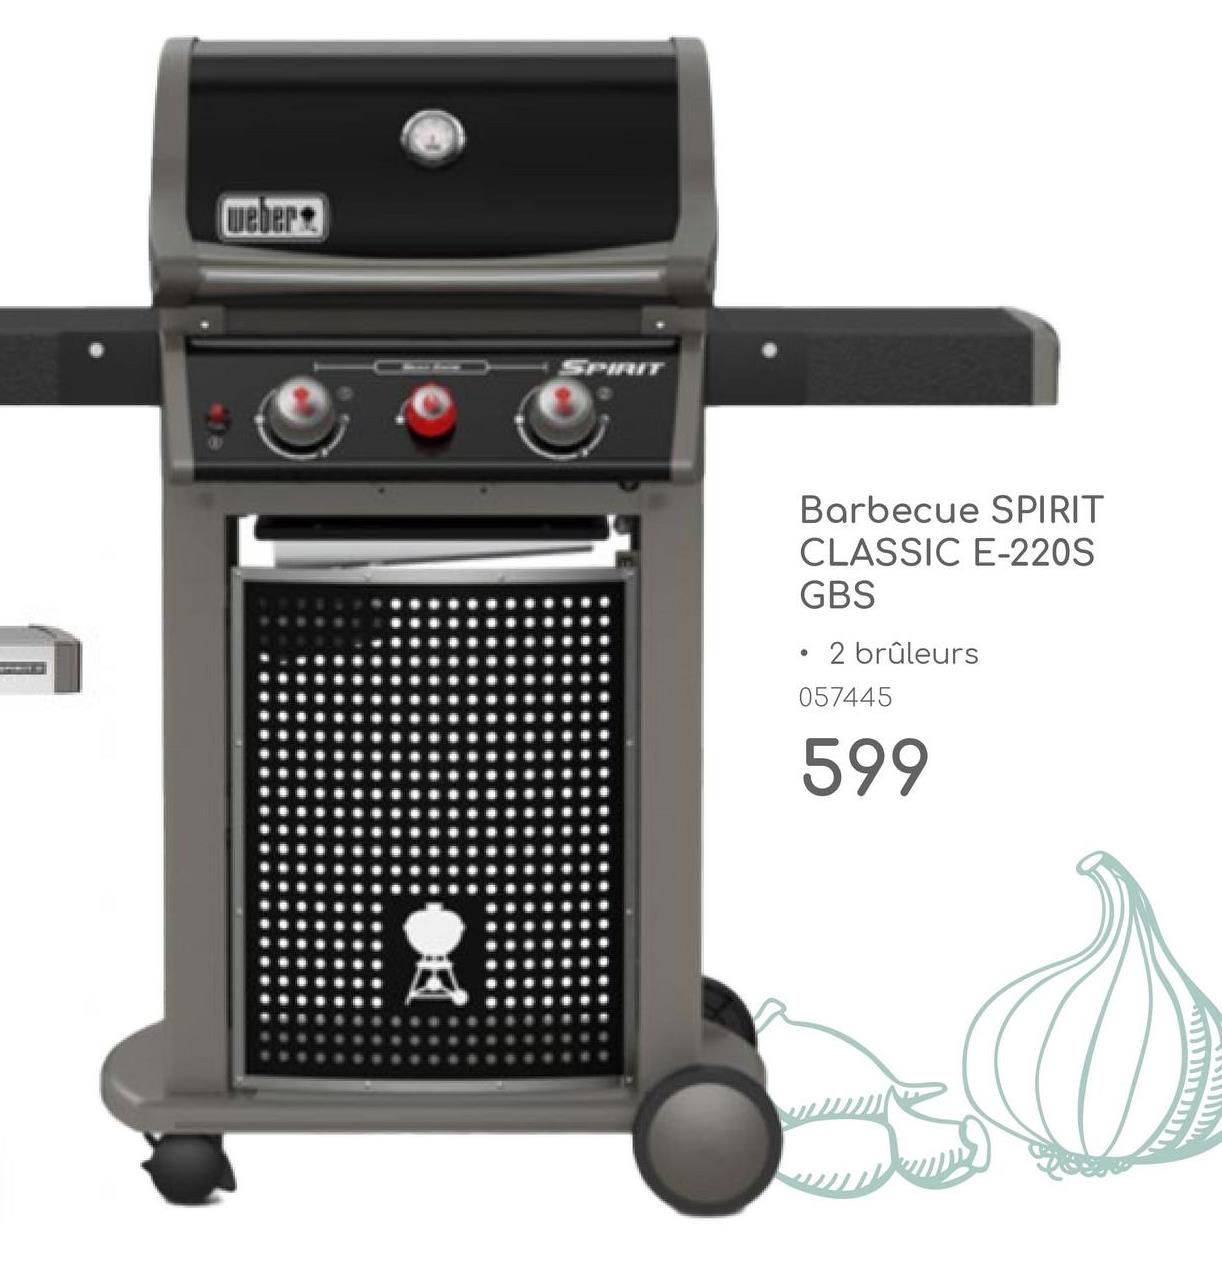 weber
RIT
Barbecue SPIRIT
CLASSIC E-220S
GBS
•
2 brûleurs
057445
599